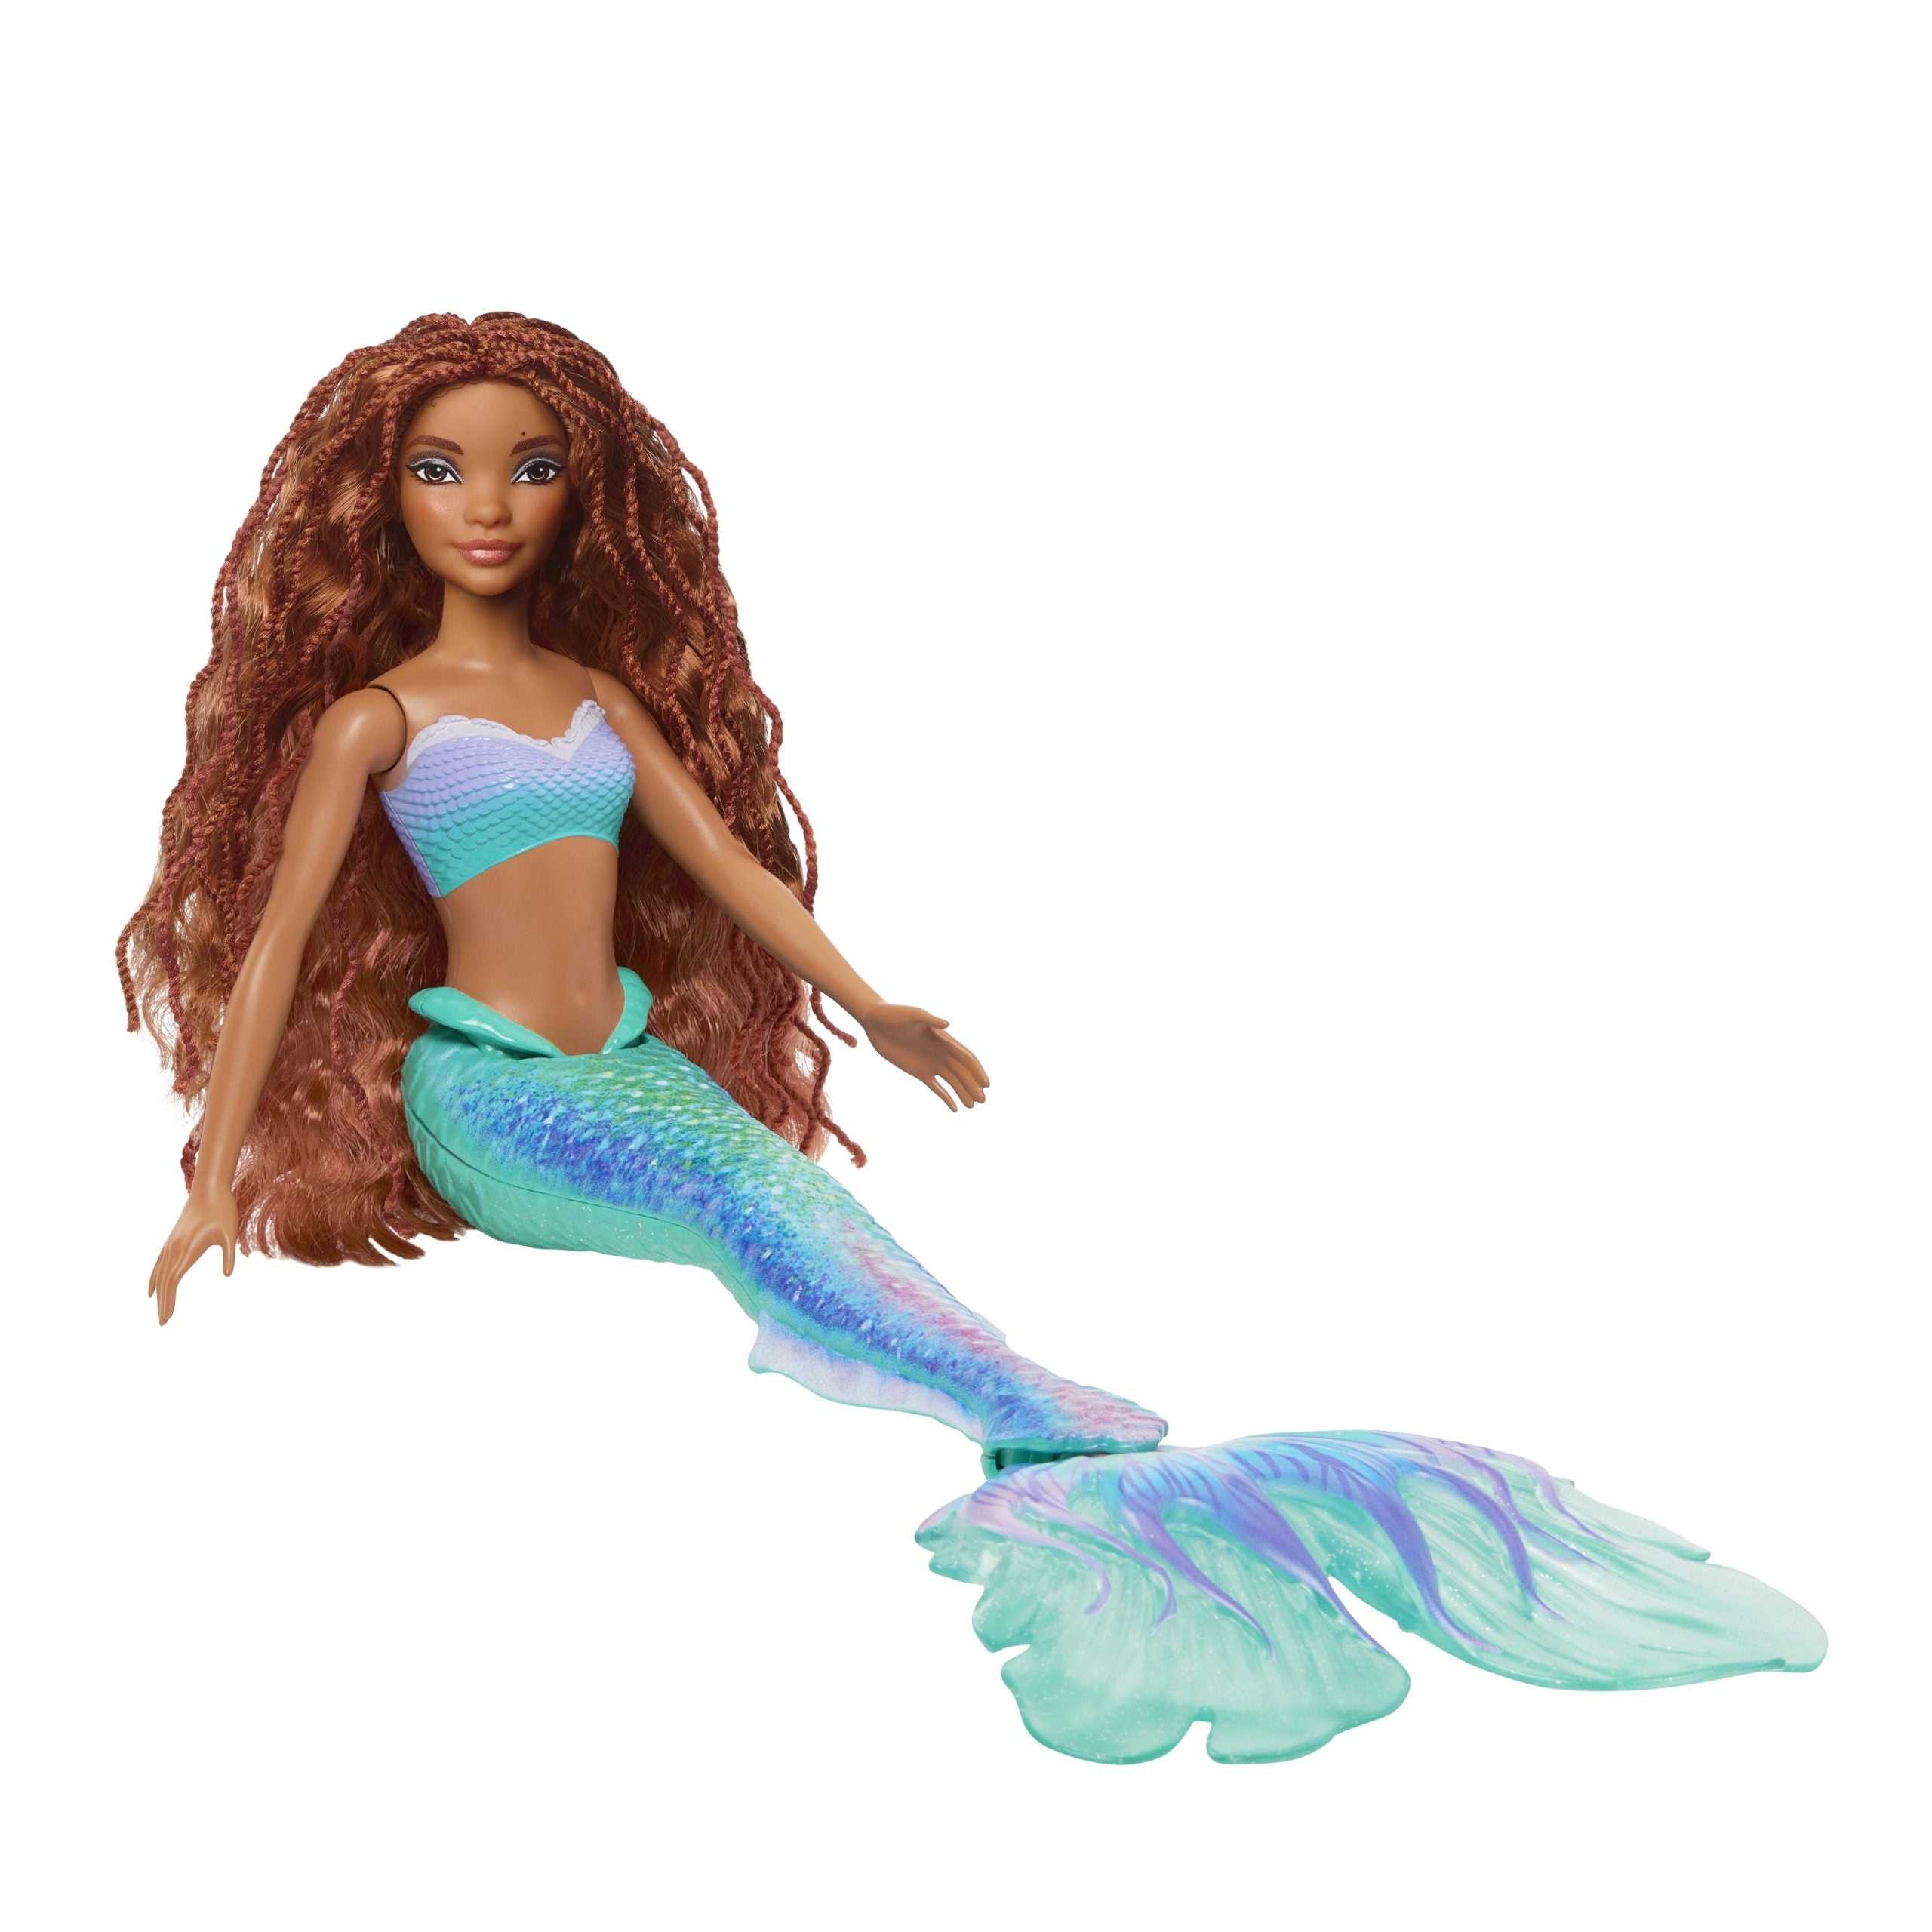 Halle Bailey Has Her Own 'Little Mermaid' Doll!